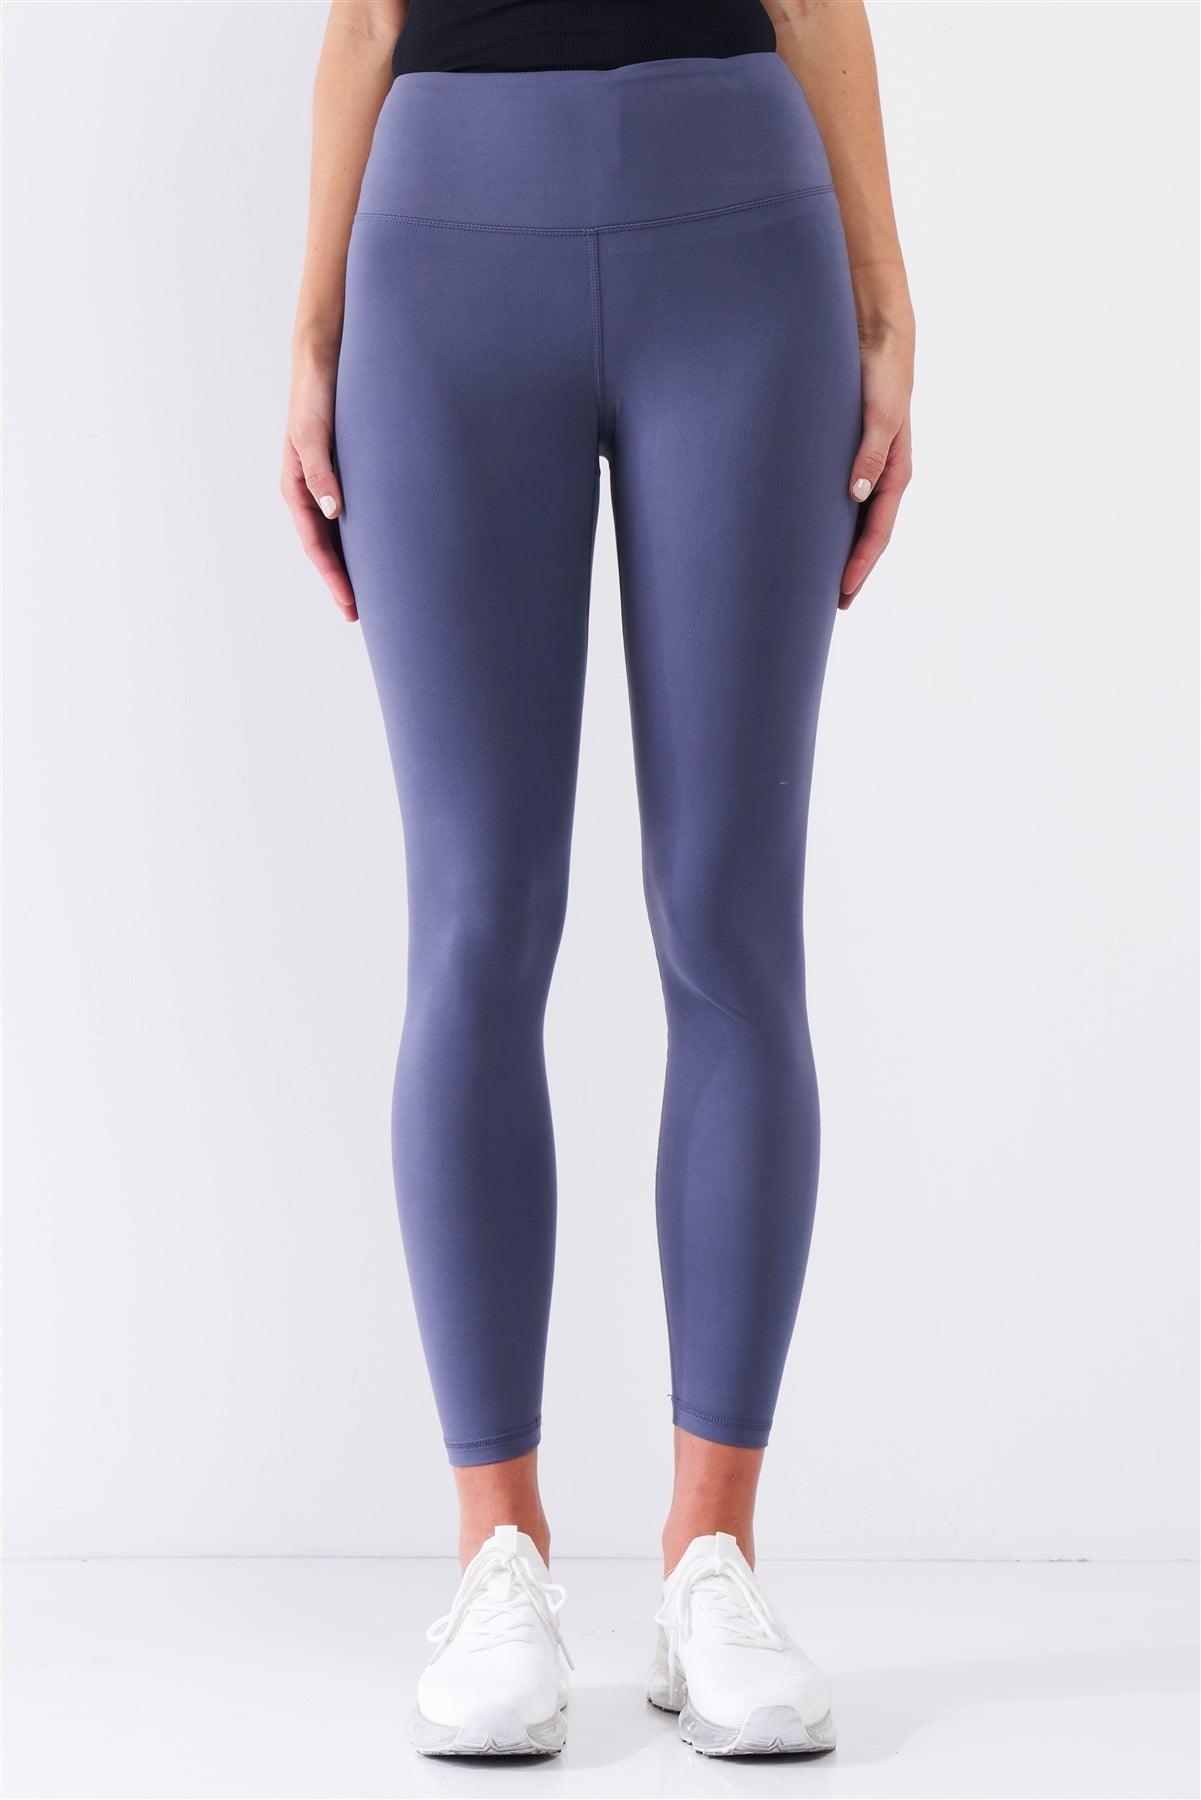 Violet Blue Mid-Rise Inner Waist Pocket Detail Tight Fit Soft Yoga & Work Out Legging Pants /1-2-2-1